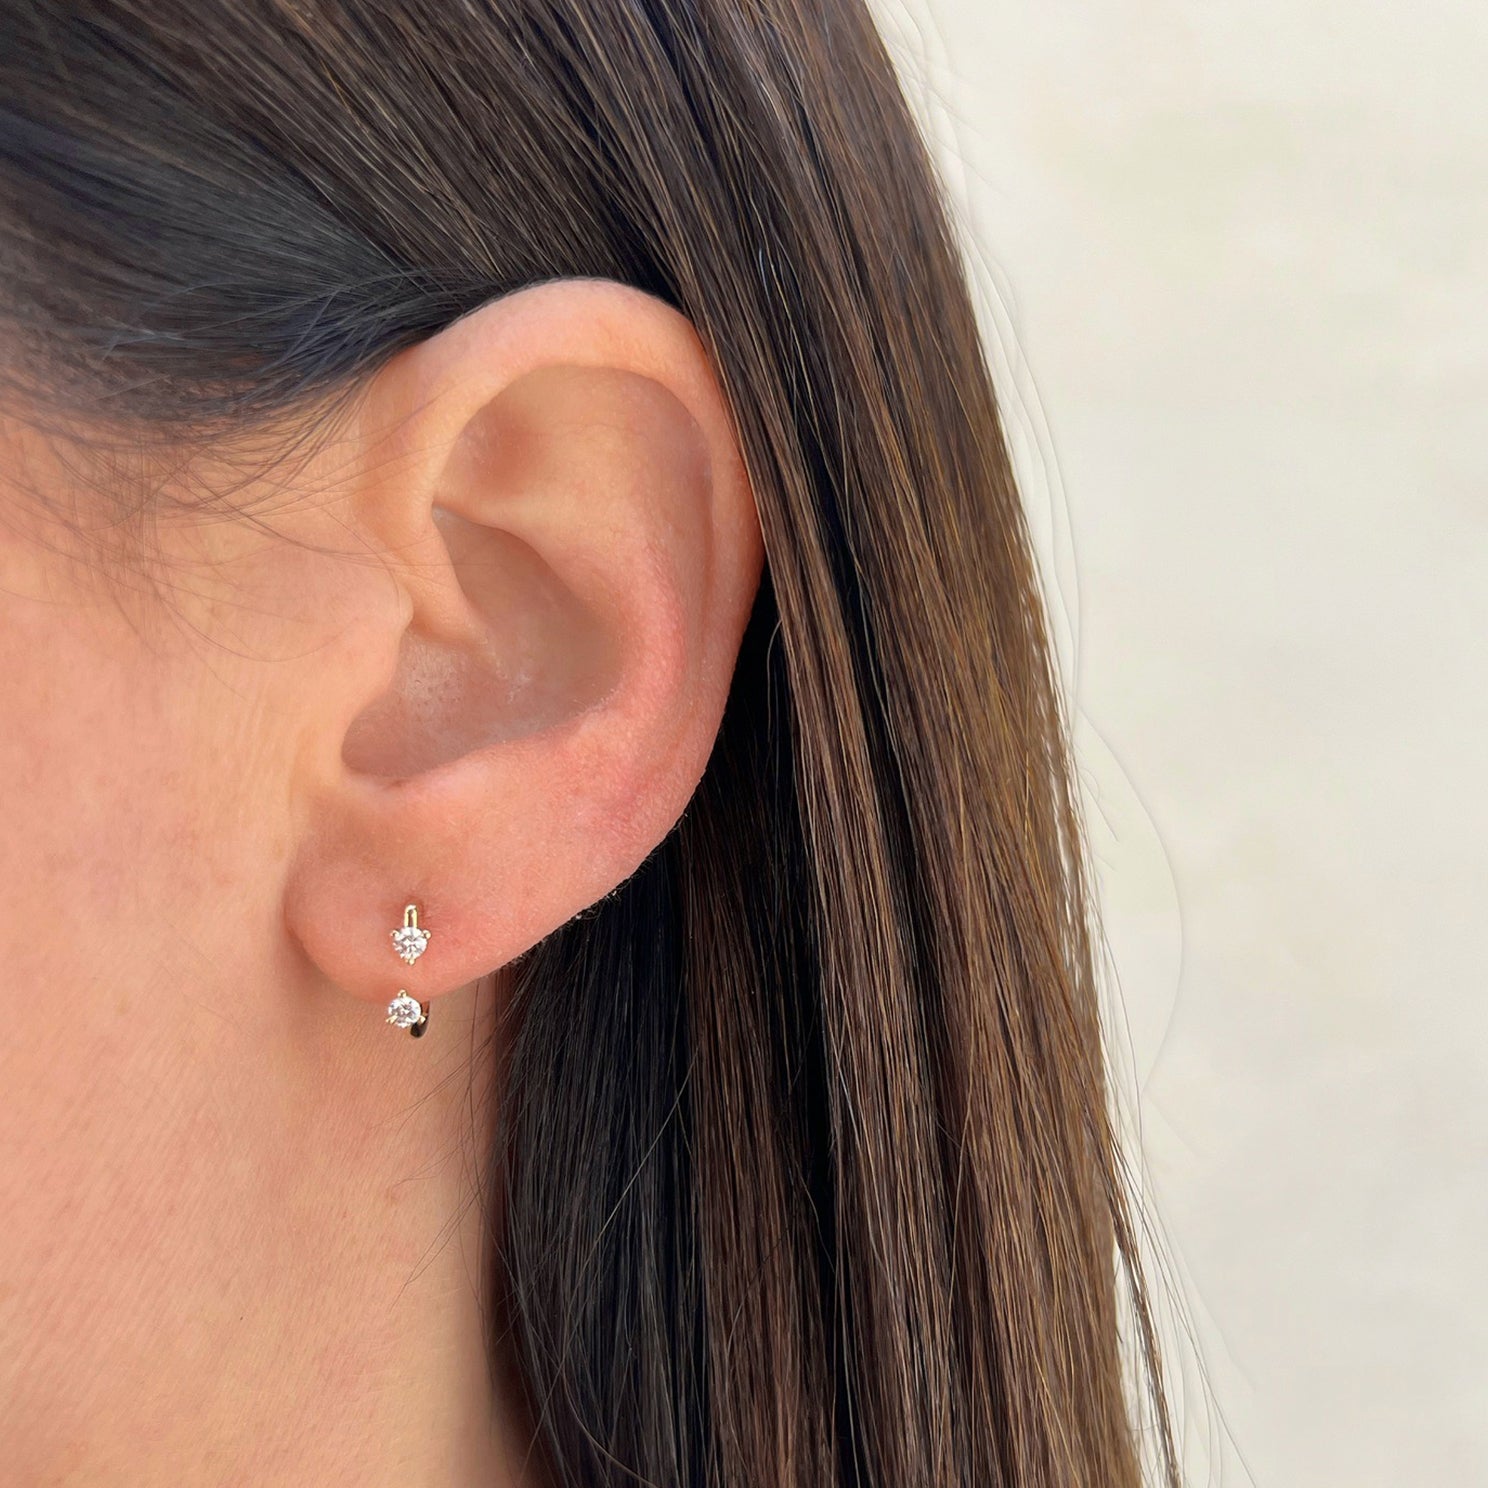 Double Prong Set Diamond Earring styled on ear of model